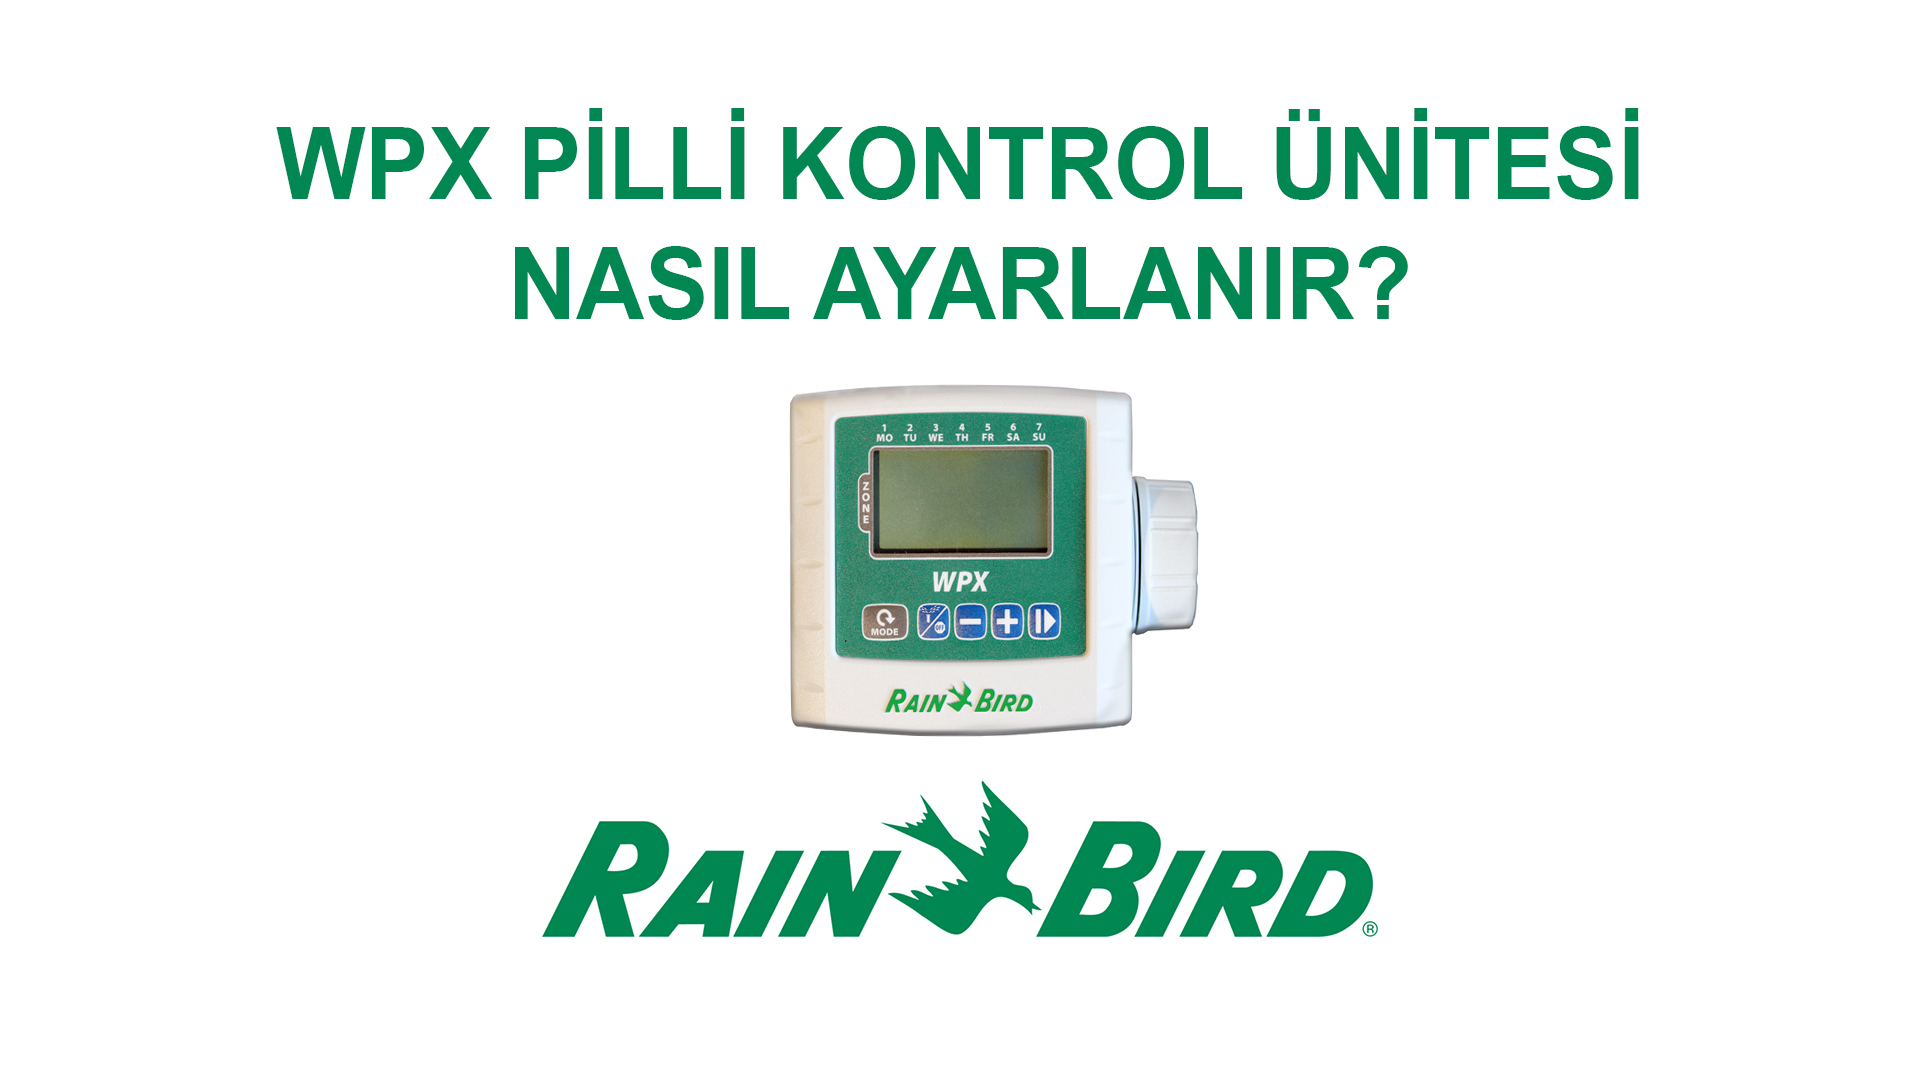 Rainbird WPX